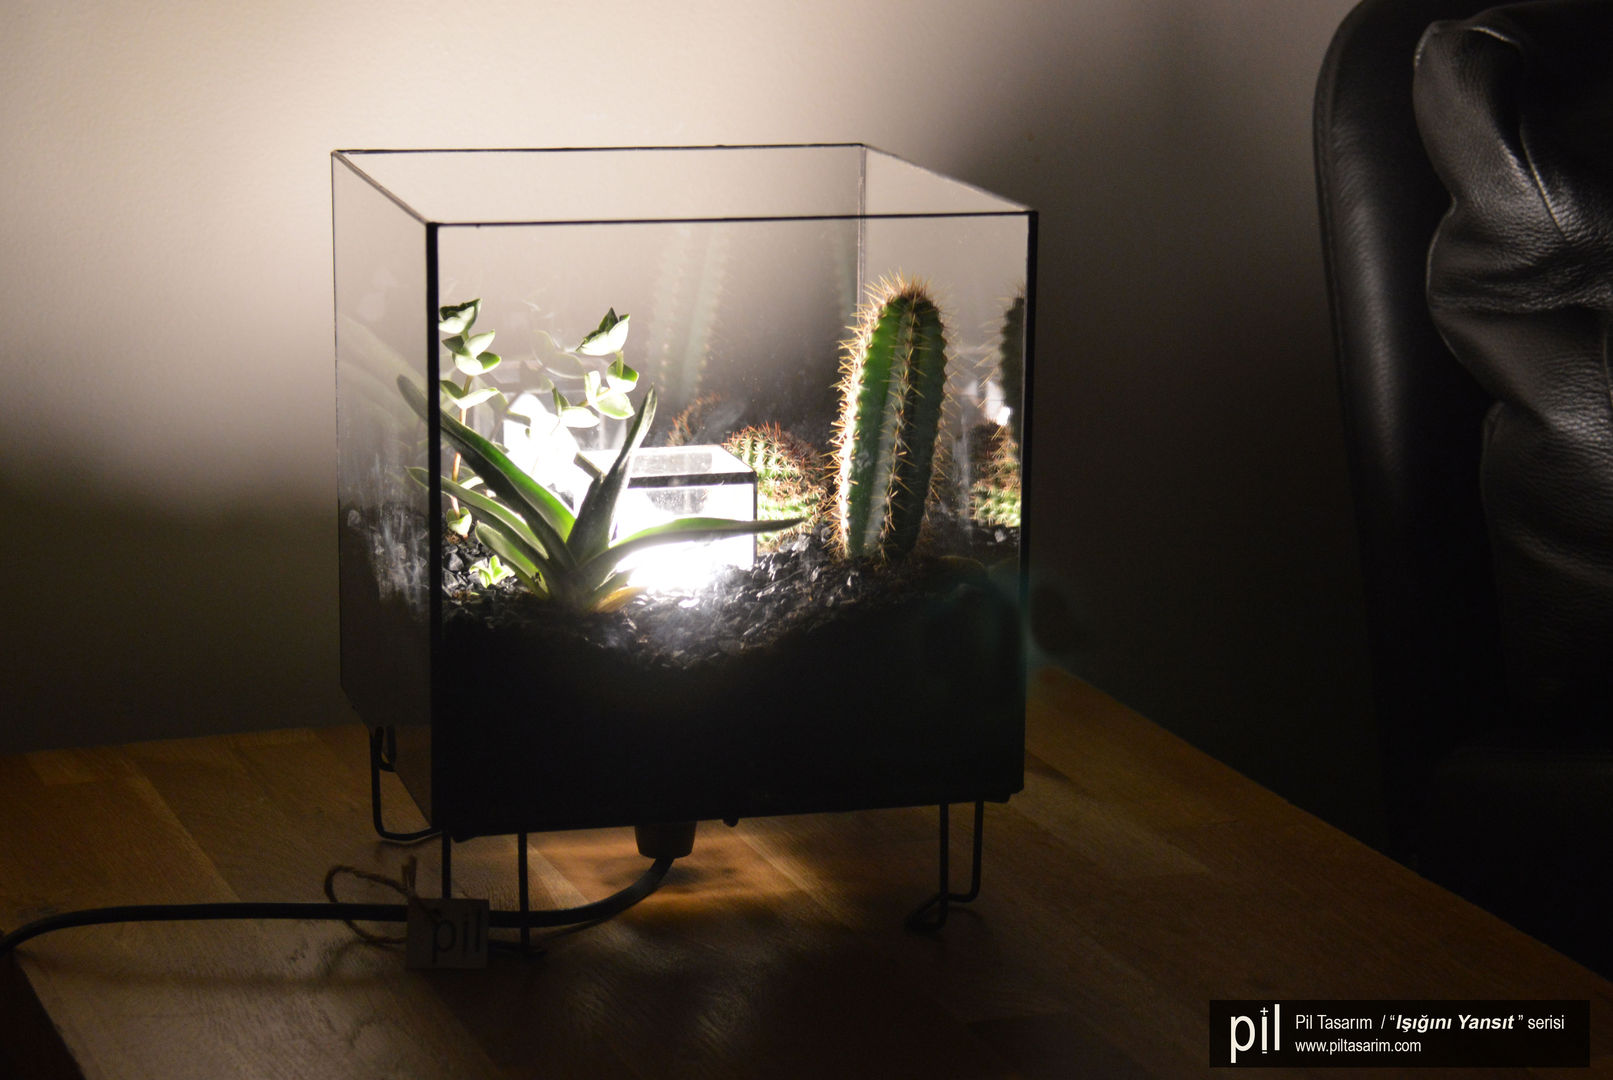 Terrarium Lighting Pil Tasarım Mimarlik + Peyzaj Mimarligi + Ic Mimarlik حديقة زجاج Plants & flowers